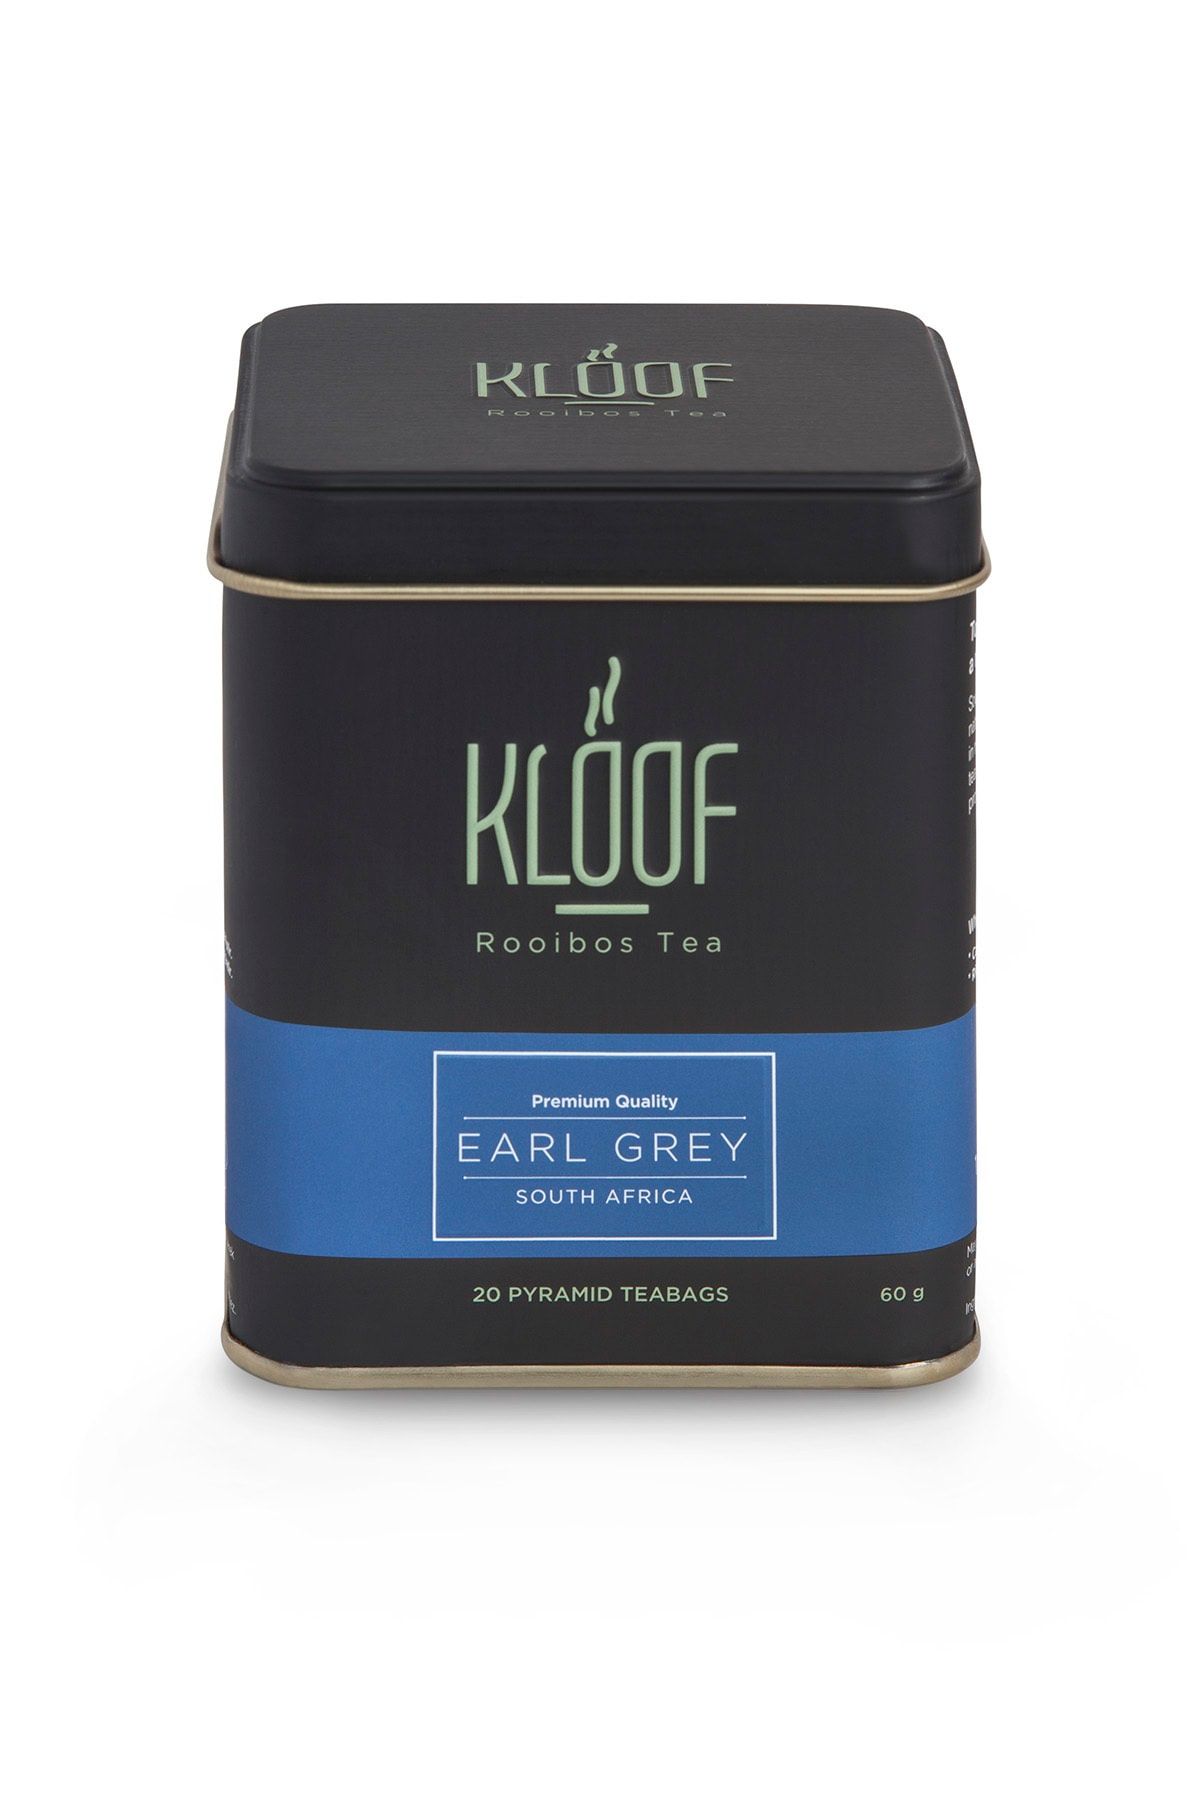 KLOOF Rooibos Tea Earl Grey-bergamut Aromalı Roybos Çayı 20’li Biodegradable Piramit Poşet 60 gr